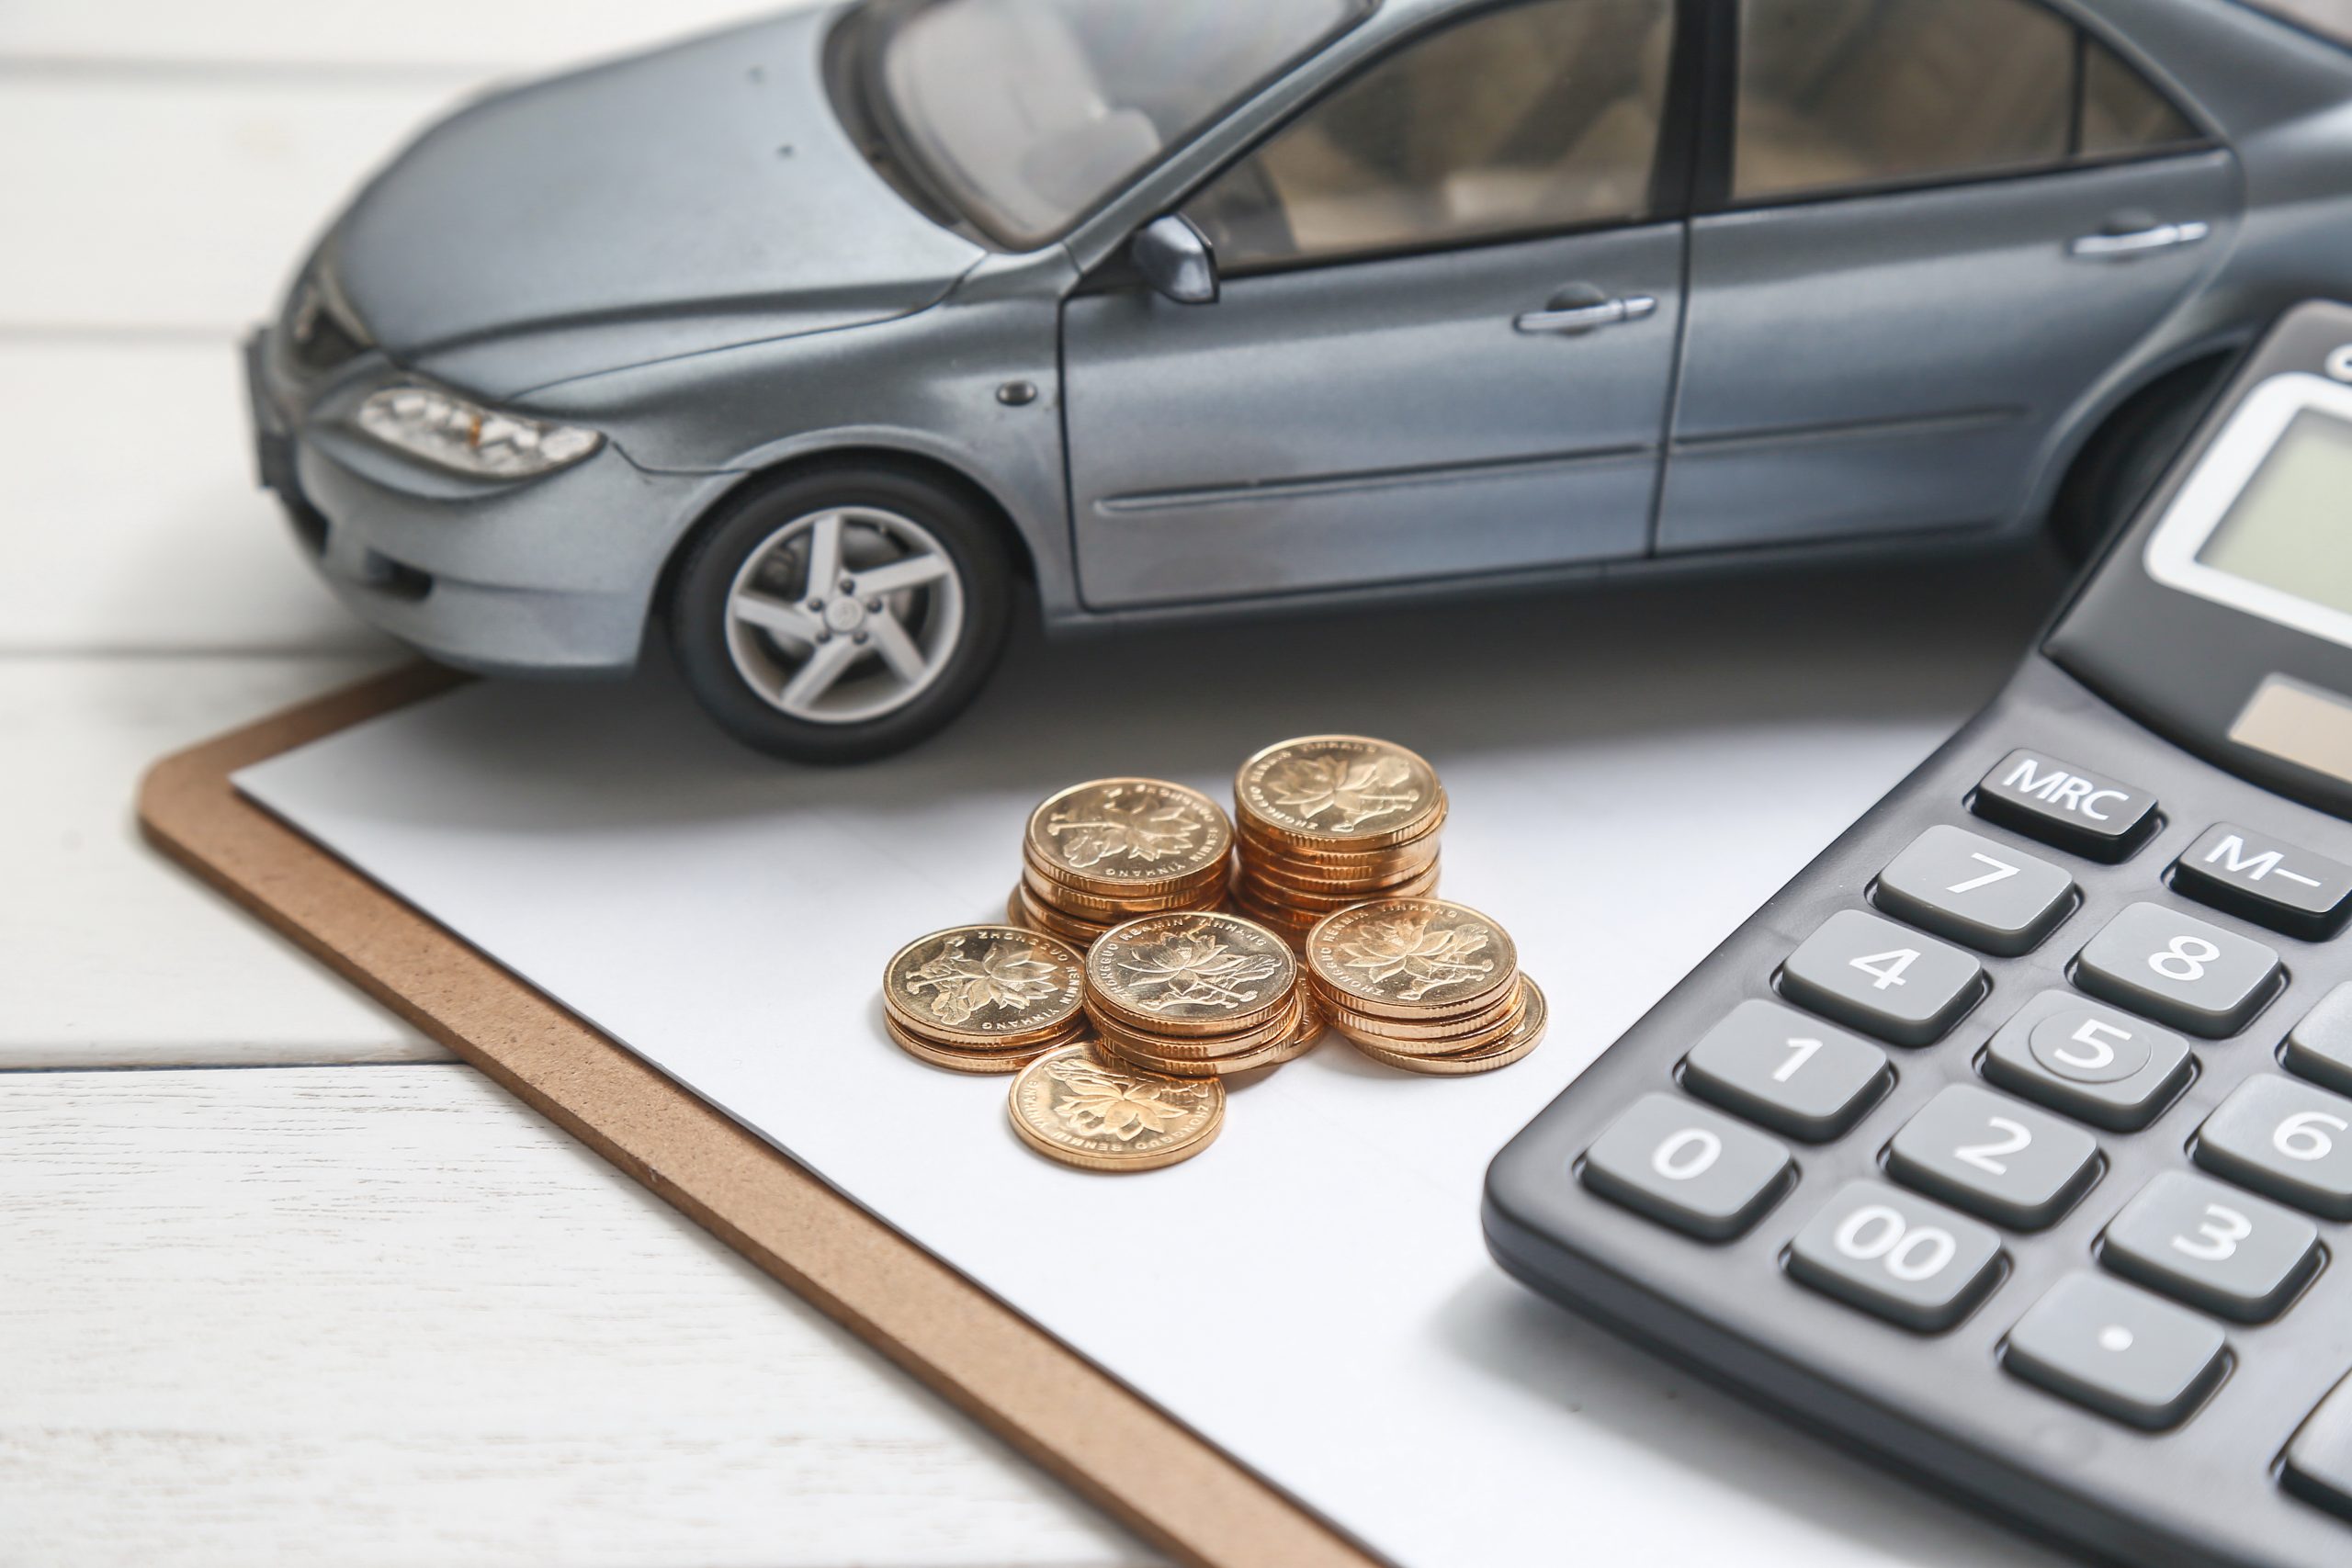 Car Loan Calculators and Tools to Help You Buy a Car